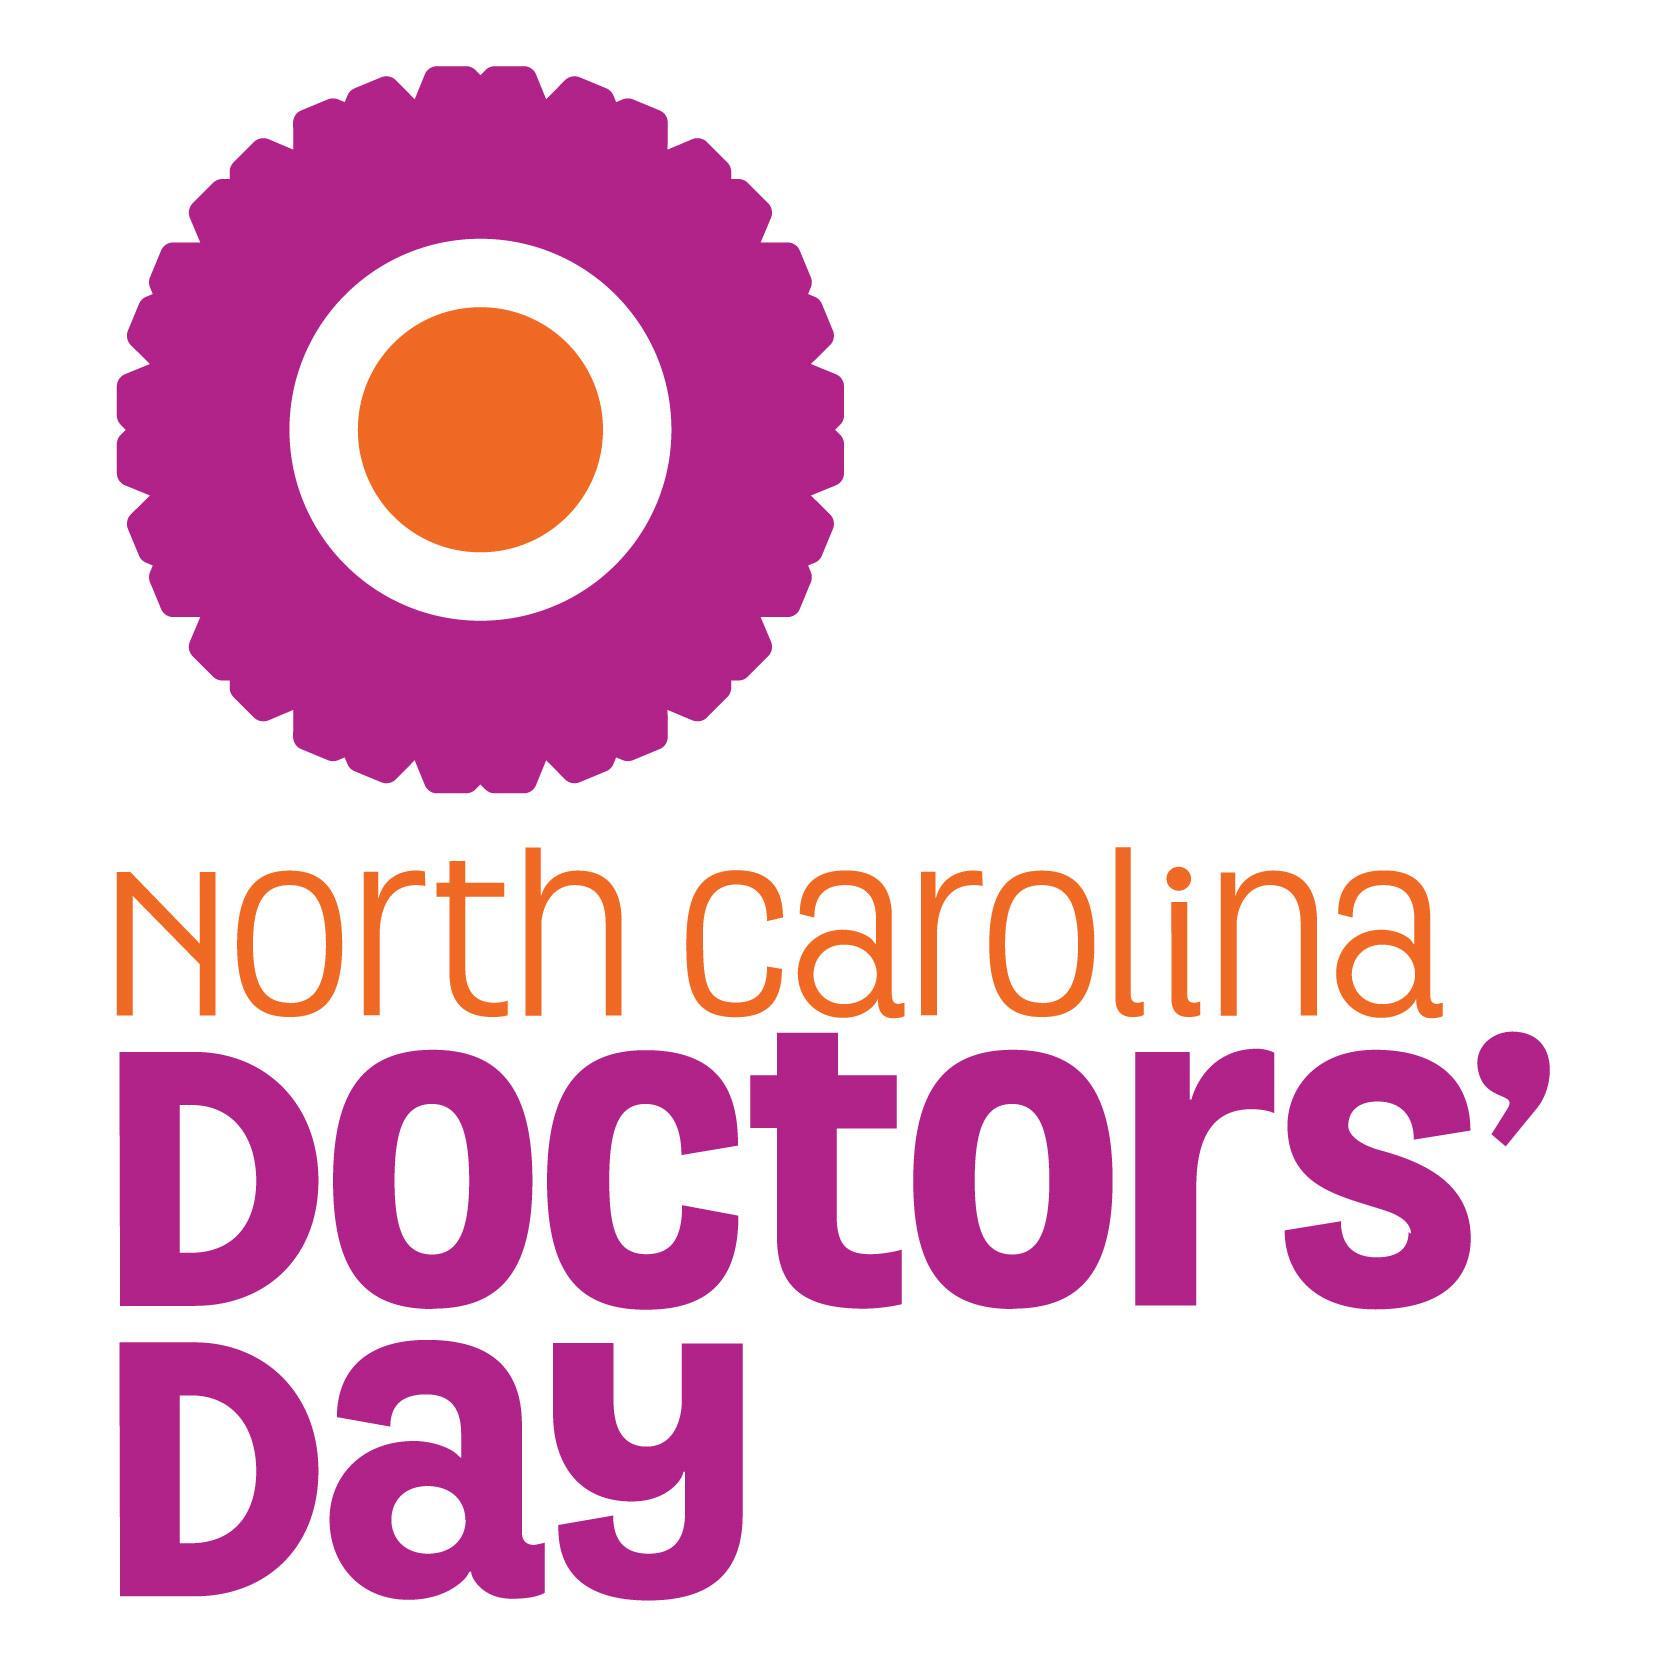 Recognizing and celebrating North Carolina physicians. #thxdocnc